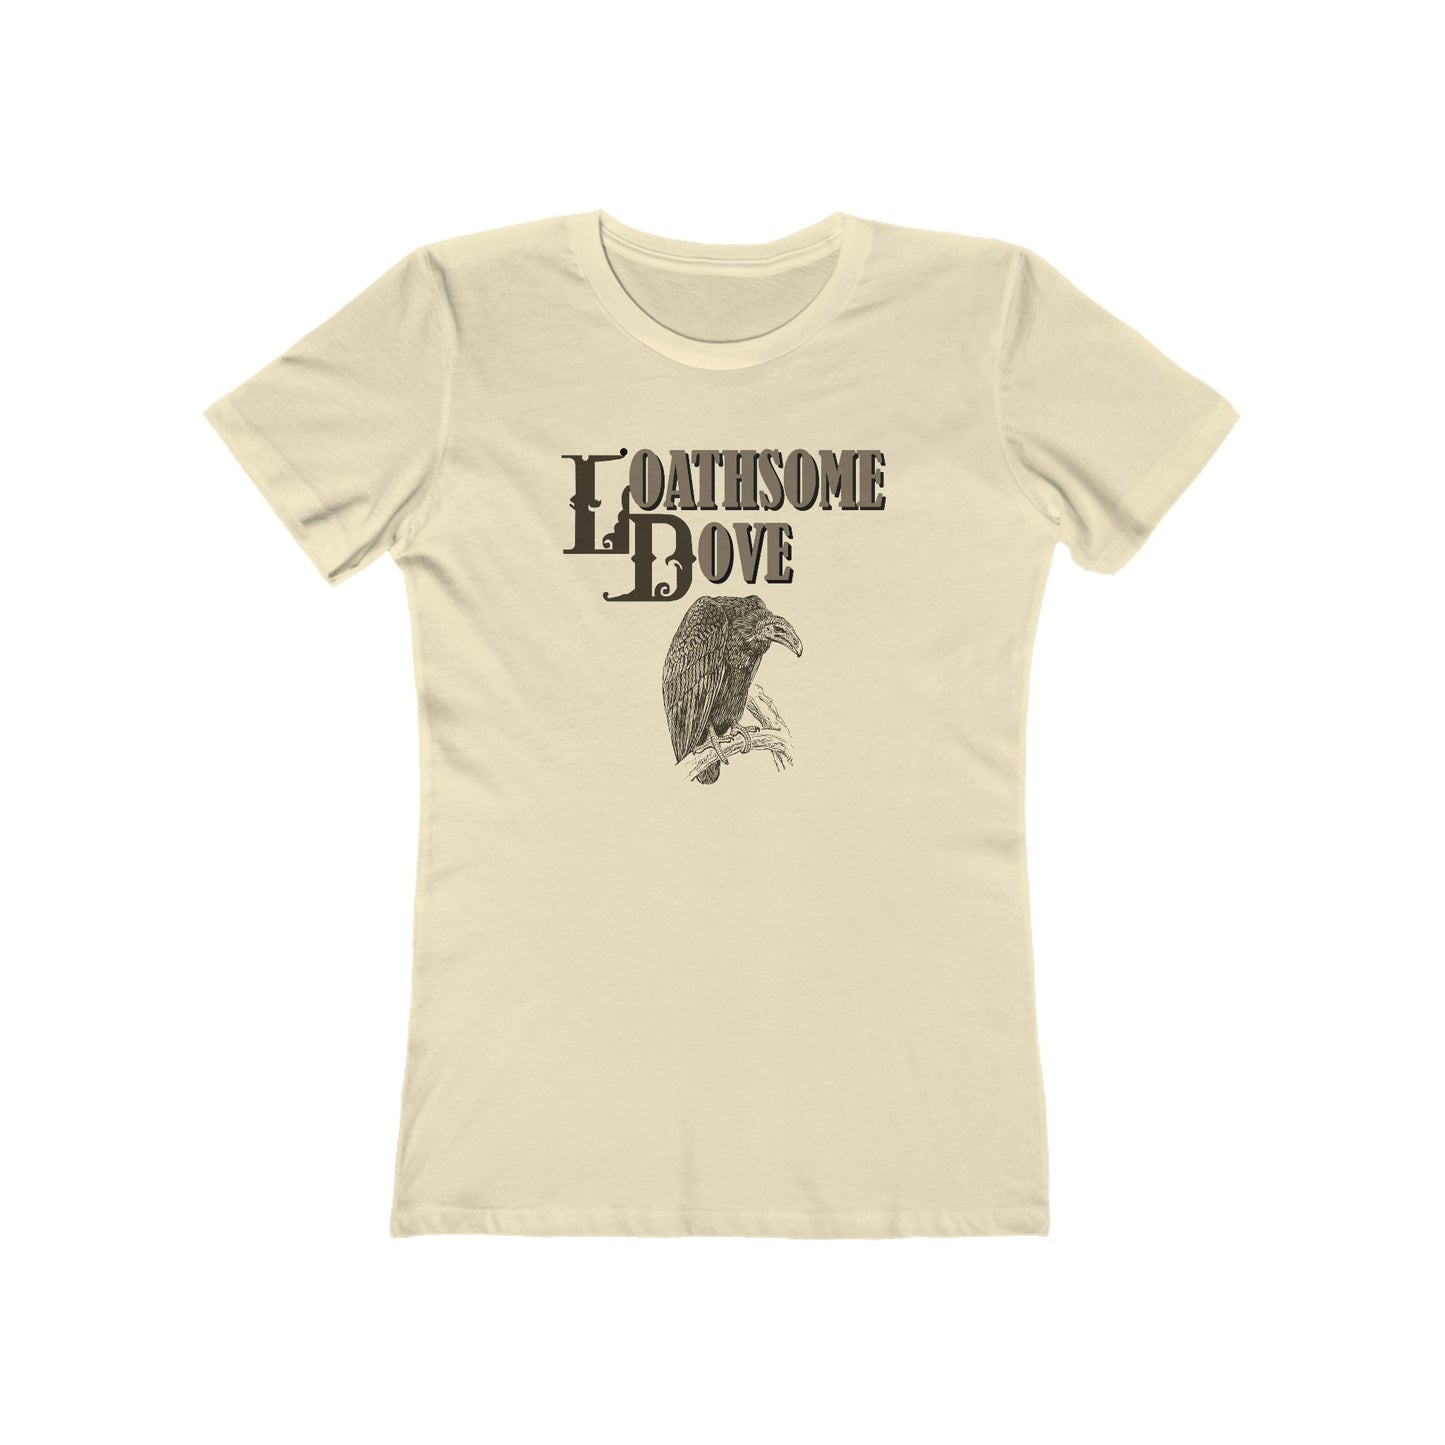 Loathsome Dove - Women's T-Shirt